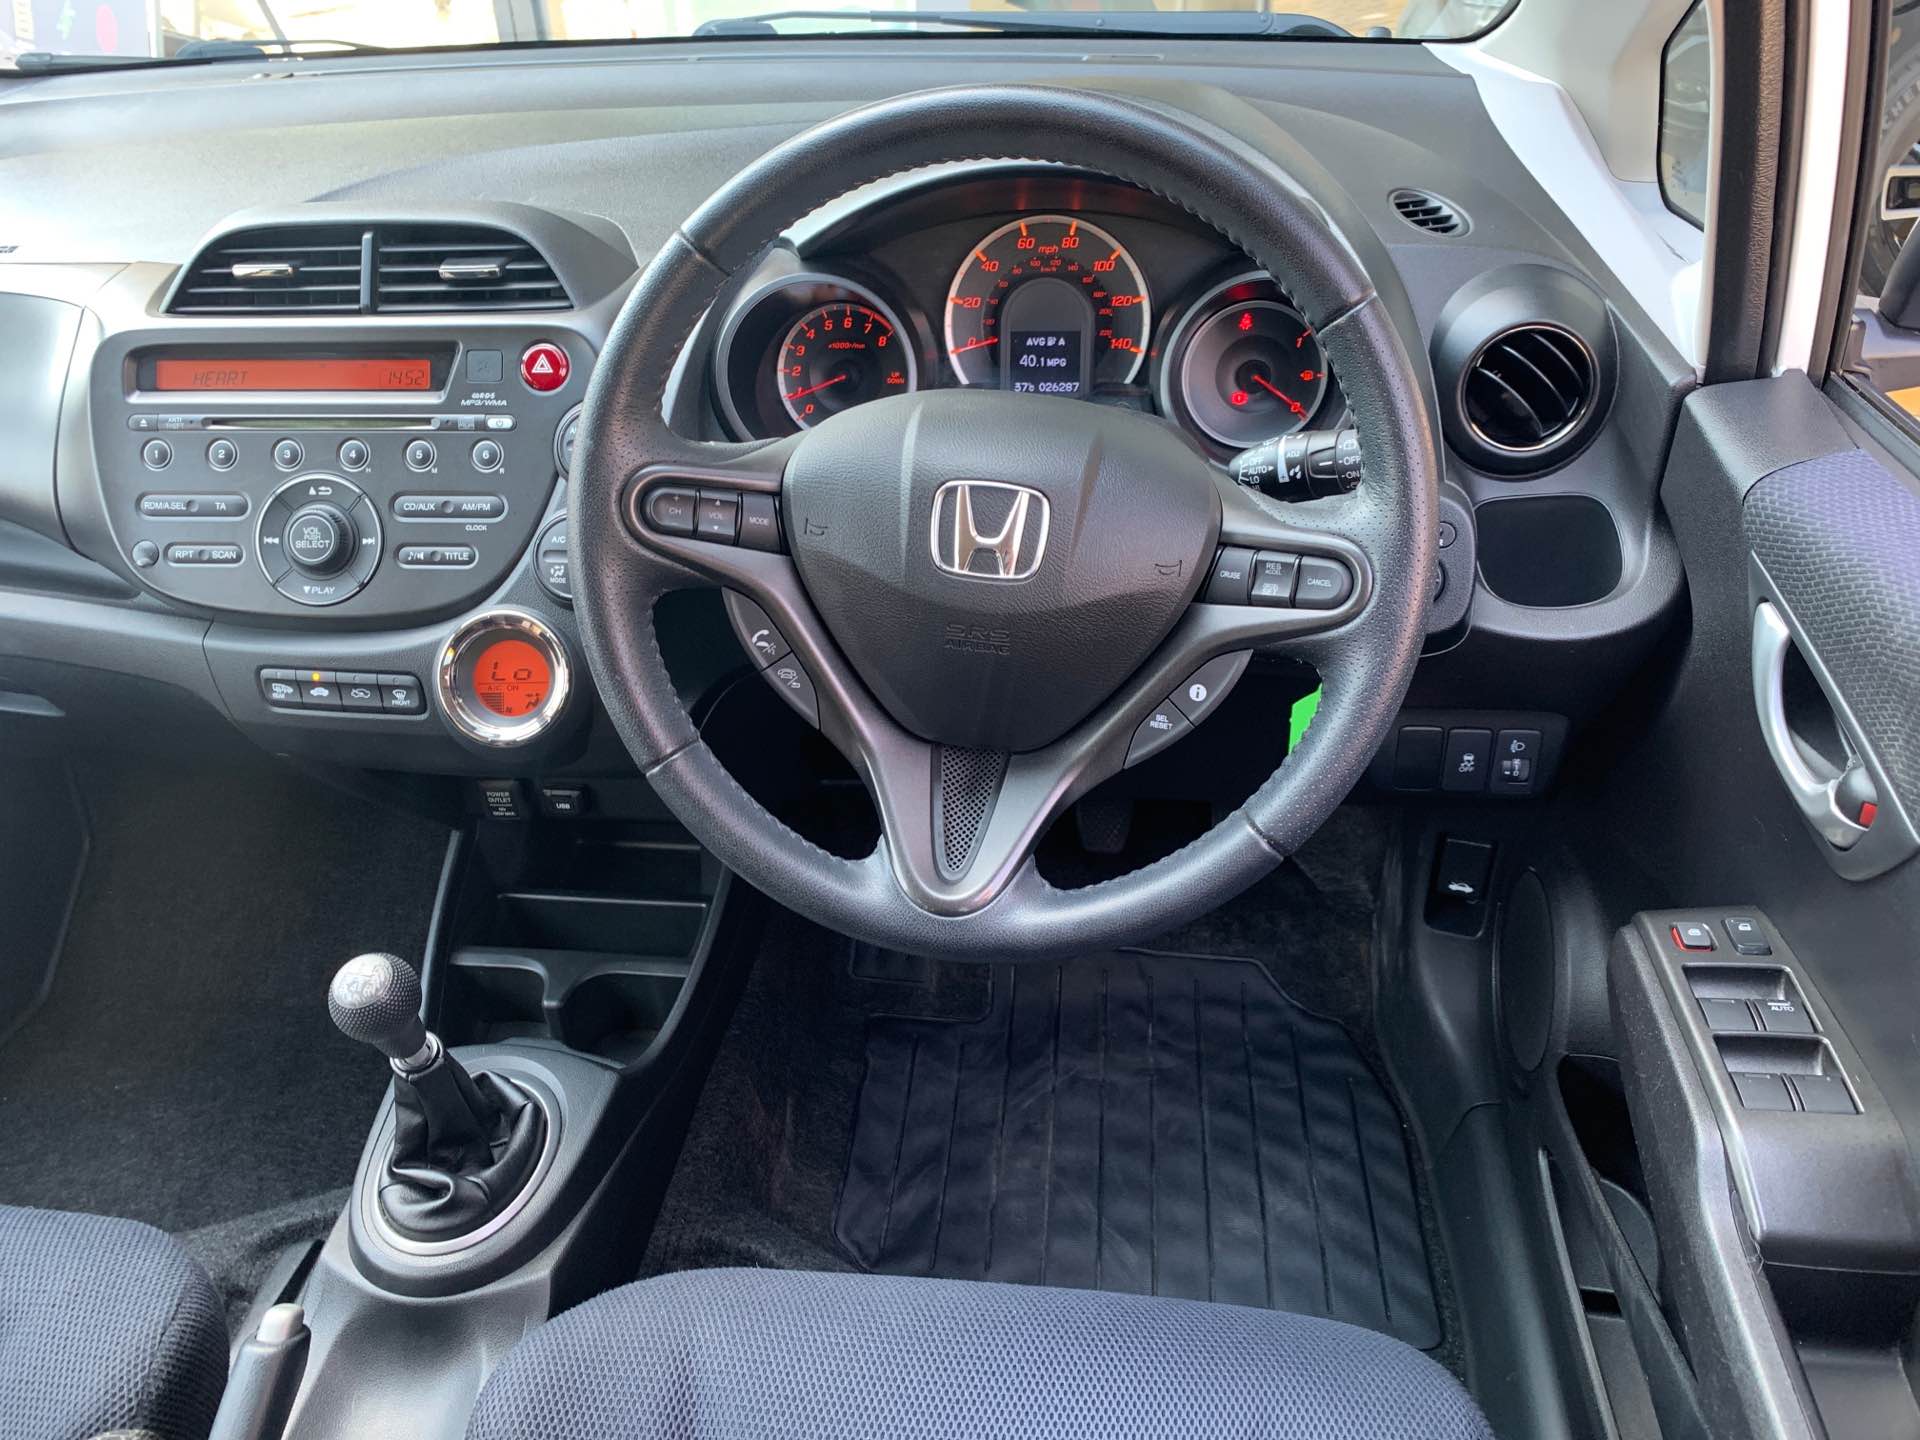 Honda JAZZ 1.4 i-VTEC EX 5dr - Image 16